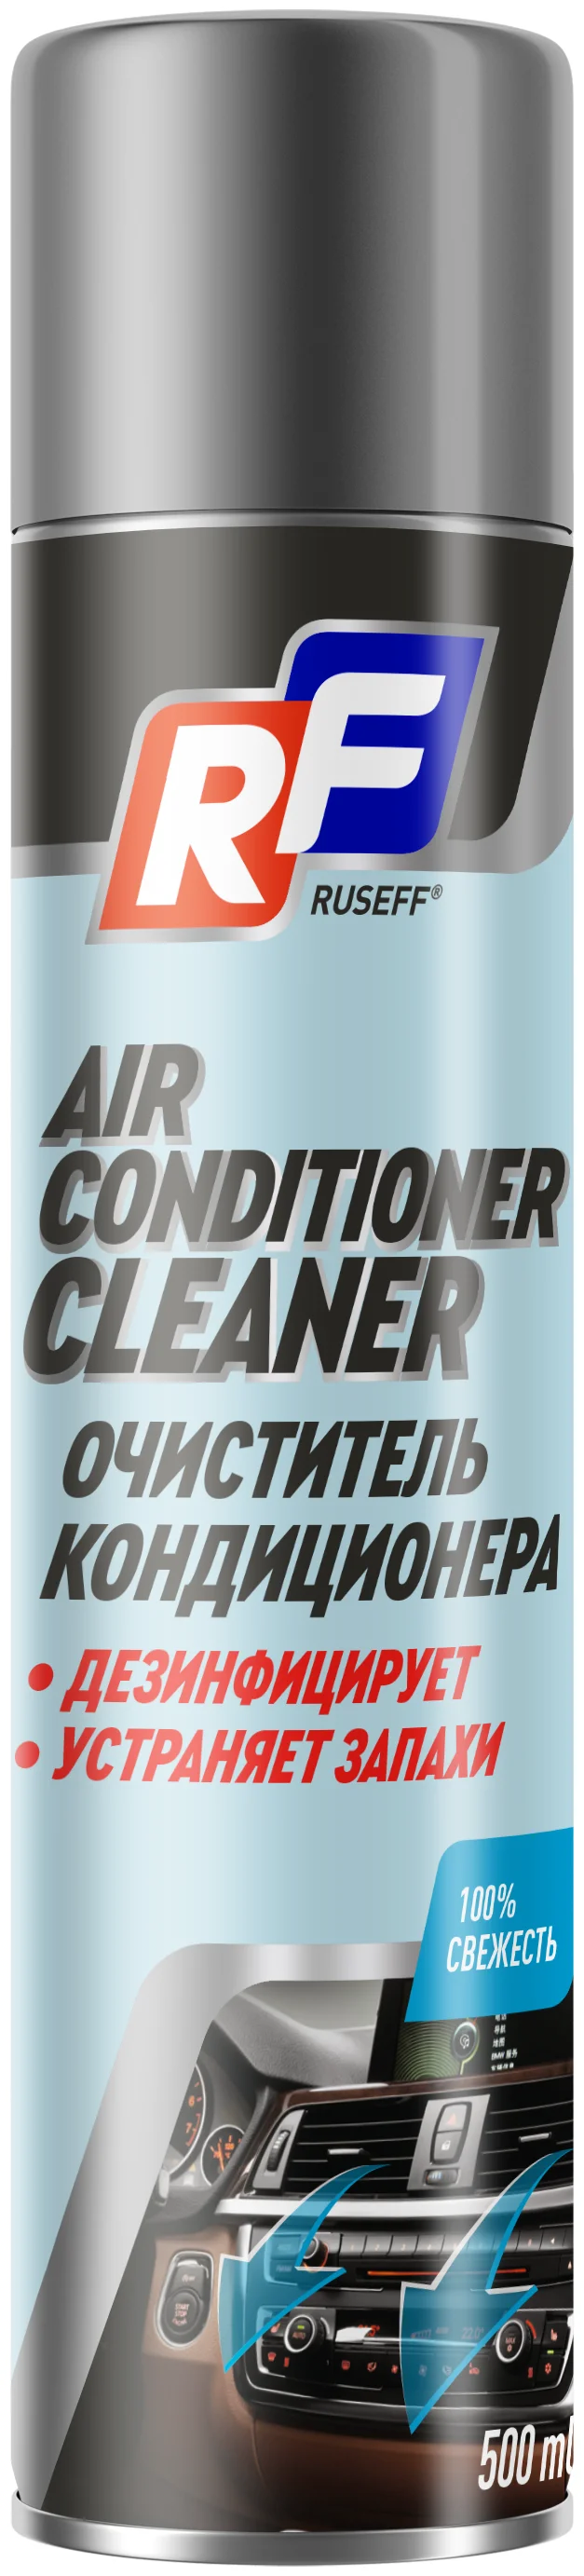 RUSEFF Air Conditioner Cleaner - консистенция: жидкость